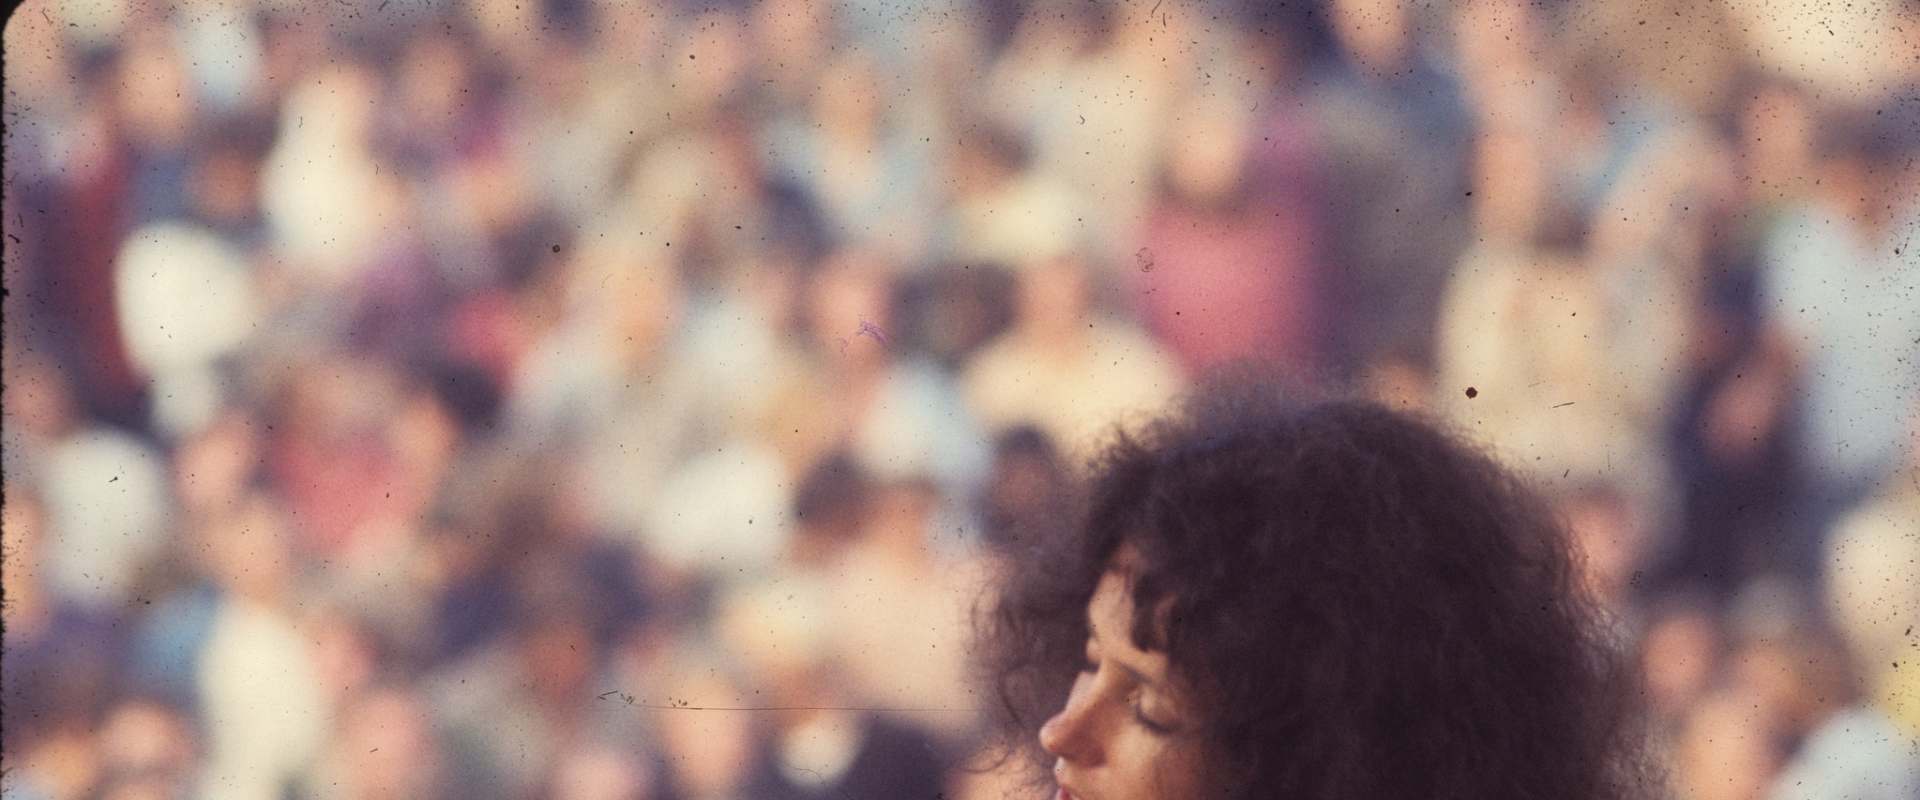 Woodstock background 2